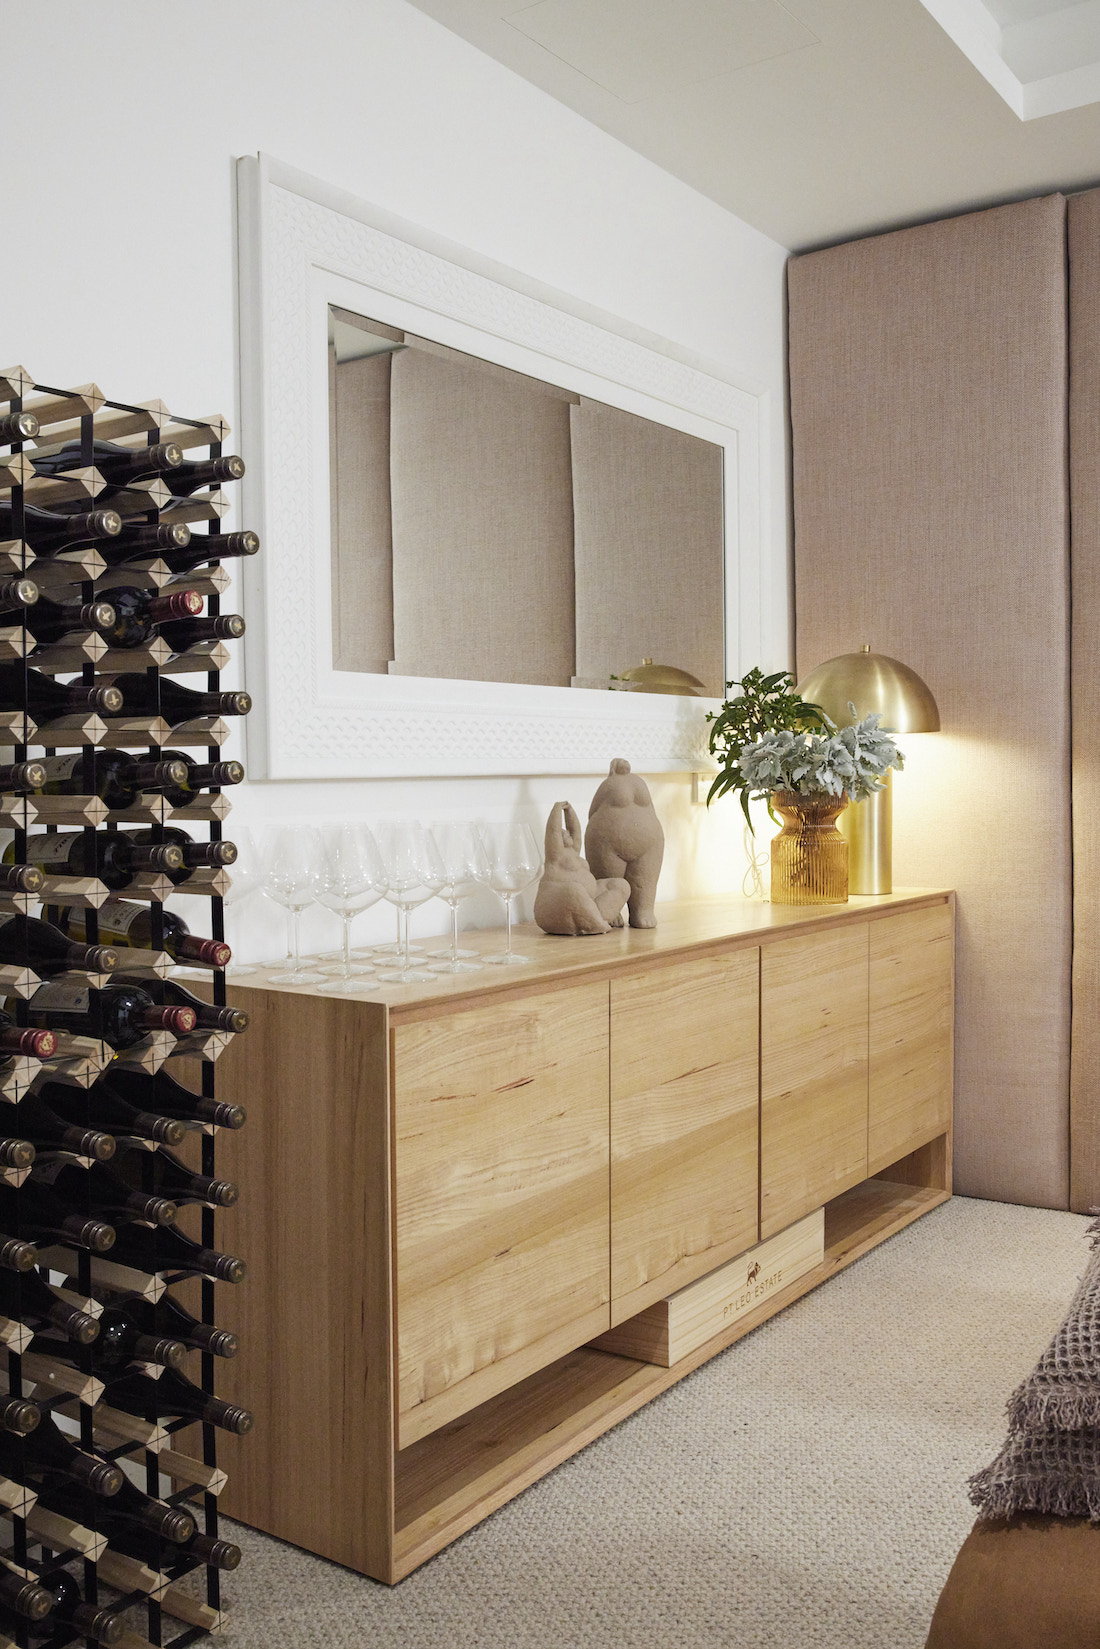 Wine storage and sideboard